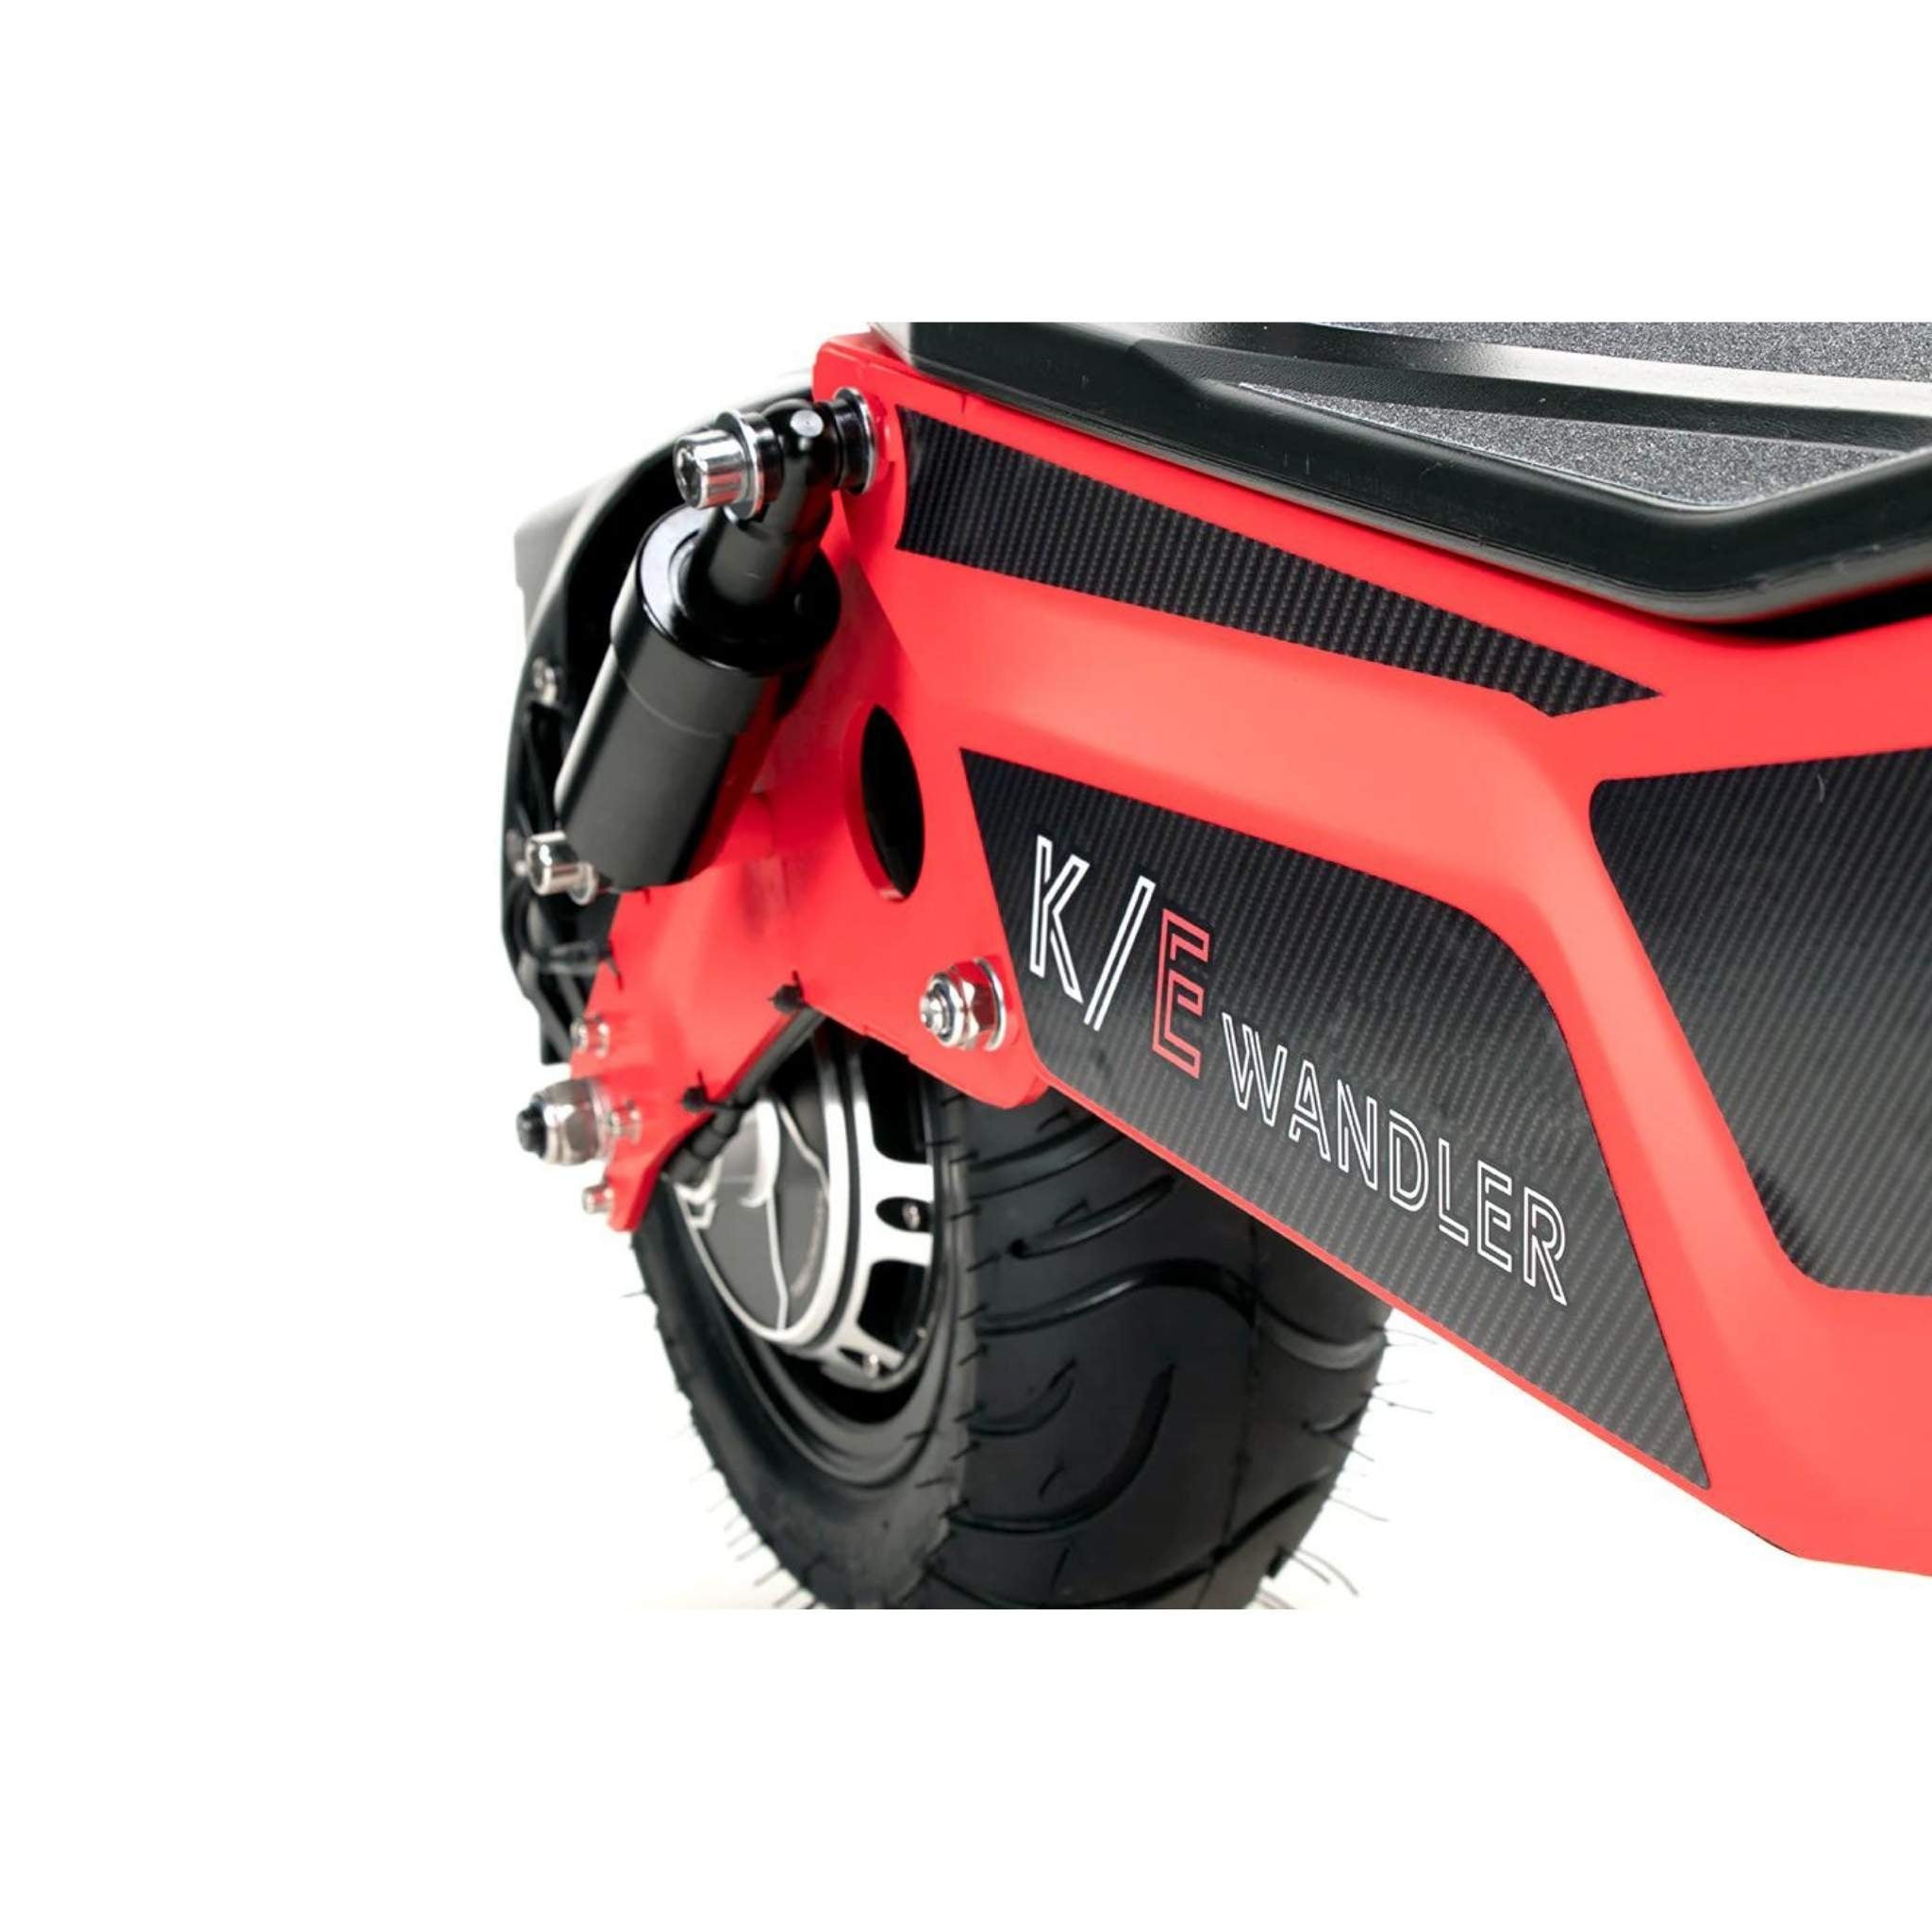 E-Roller / E-Scooter Wandler K/E 20 km/h mit Sitz und Straßenzulassung